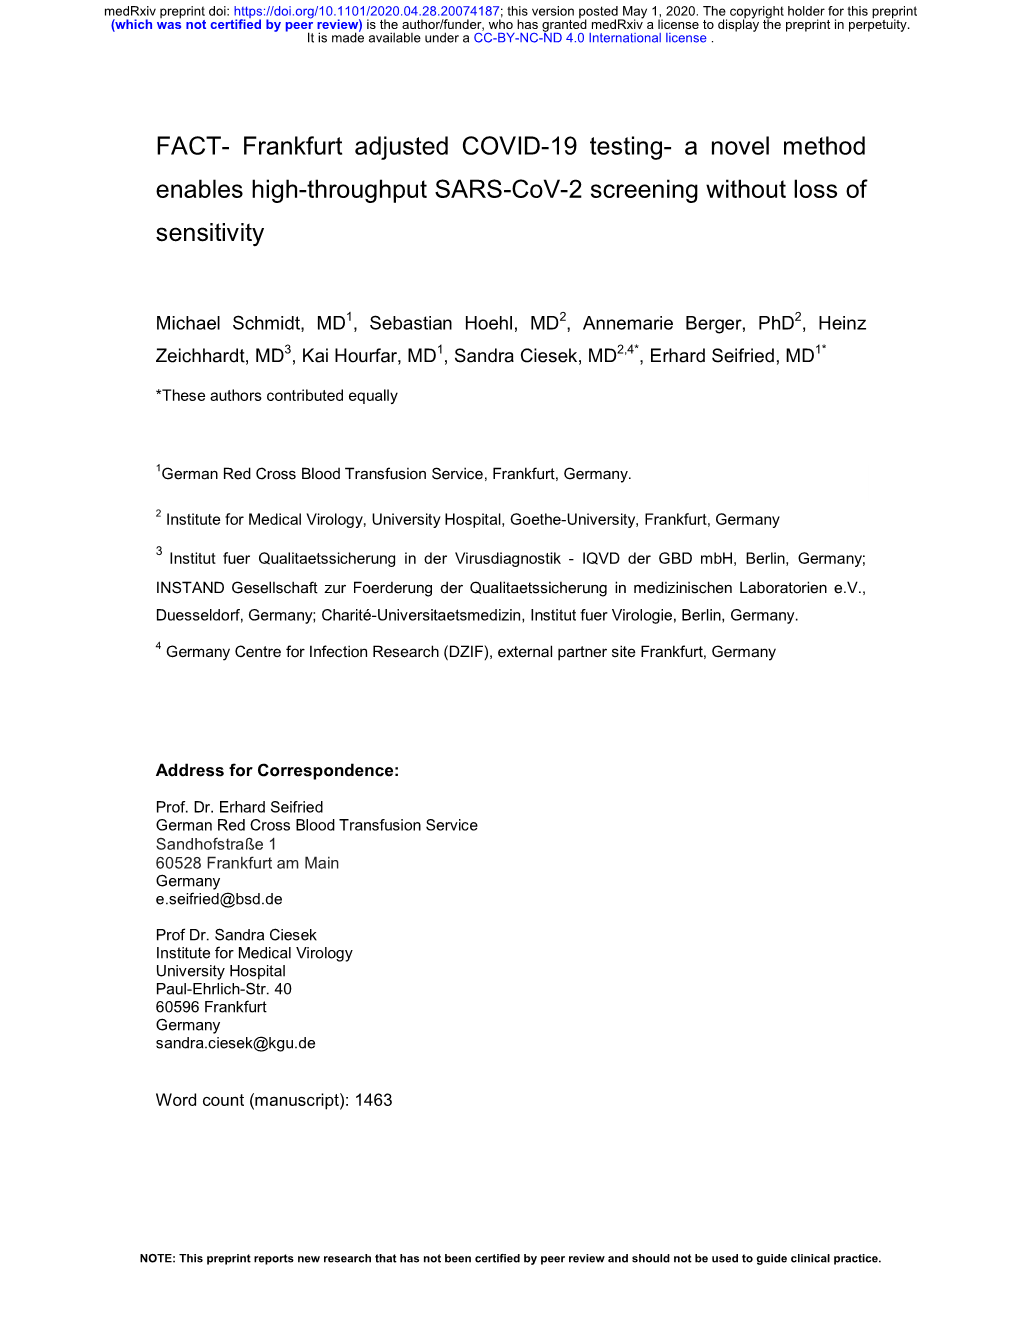 FACT- Frankfurt Adjusted COVID-19 Testing- a Novel Method Enables High-Throughput SARS-Cov-2 Screening Without Loss of Sensitivity